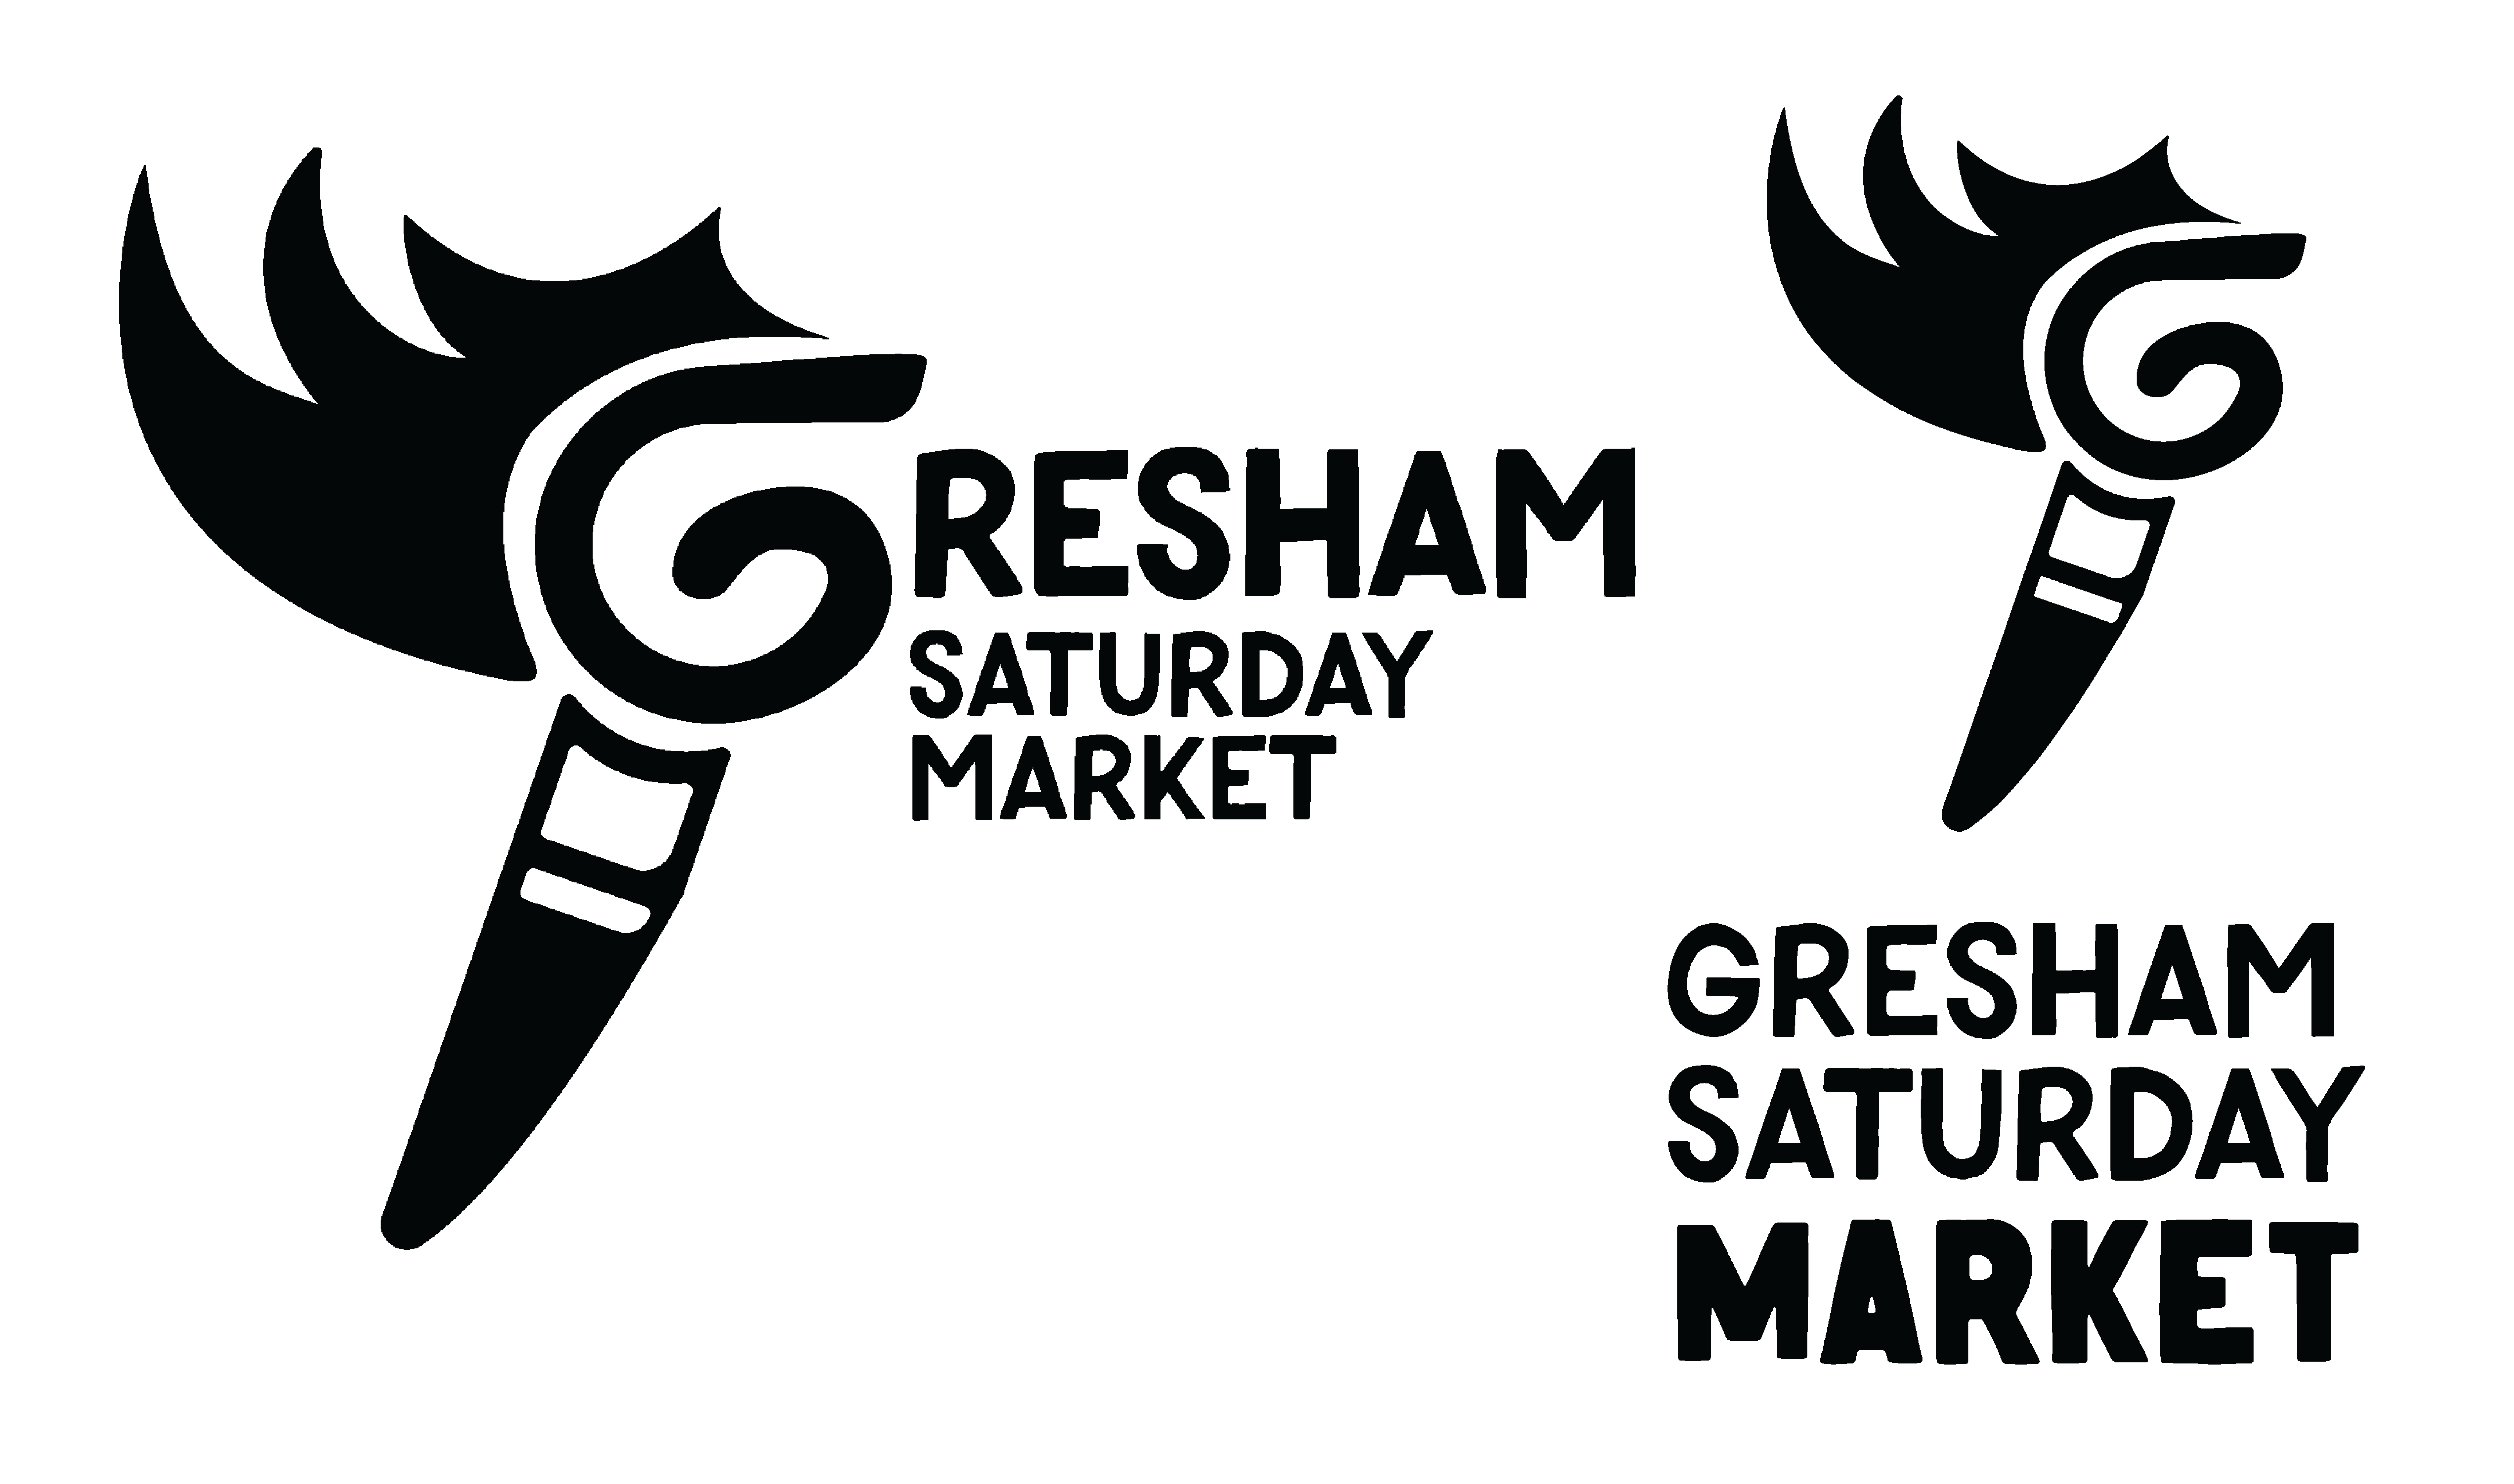 Logo done for Gresham Saturday Market.